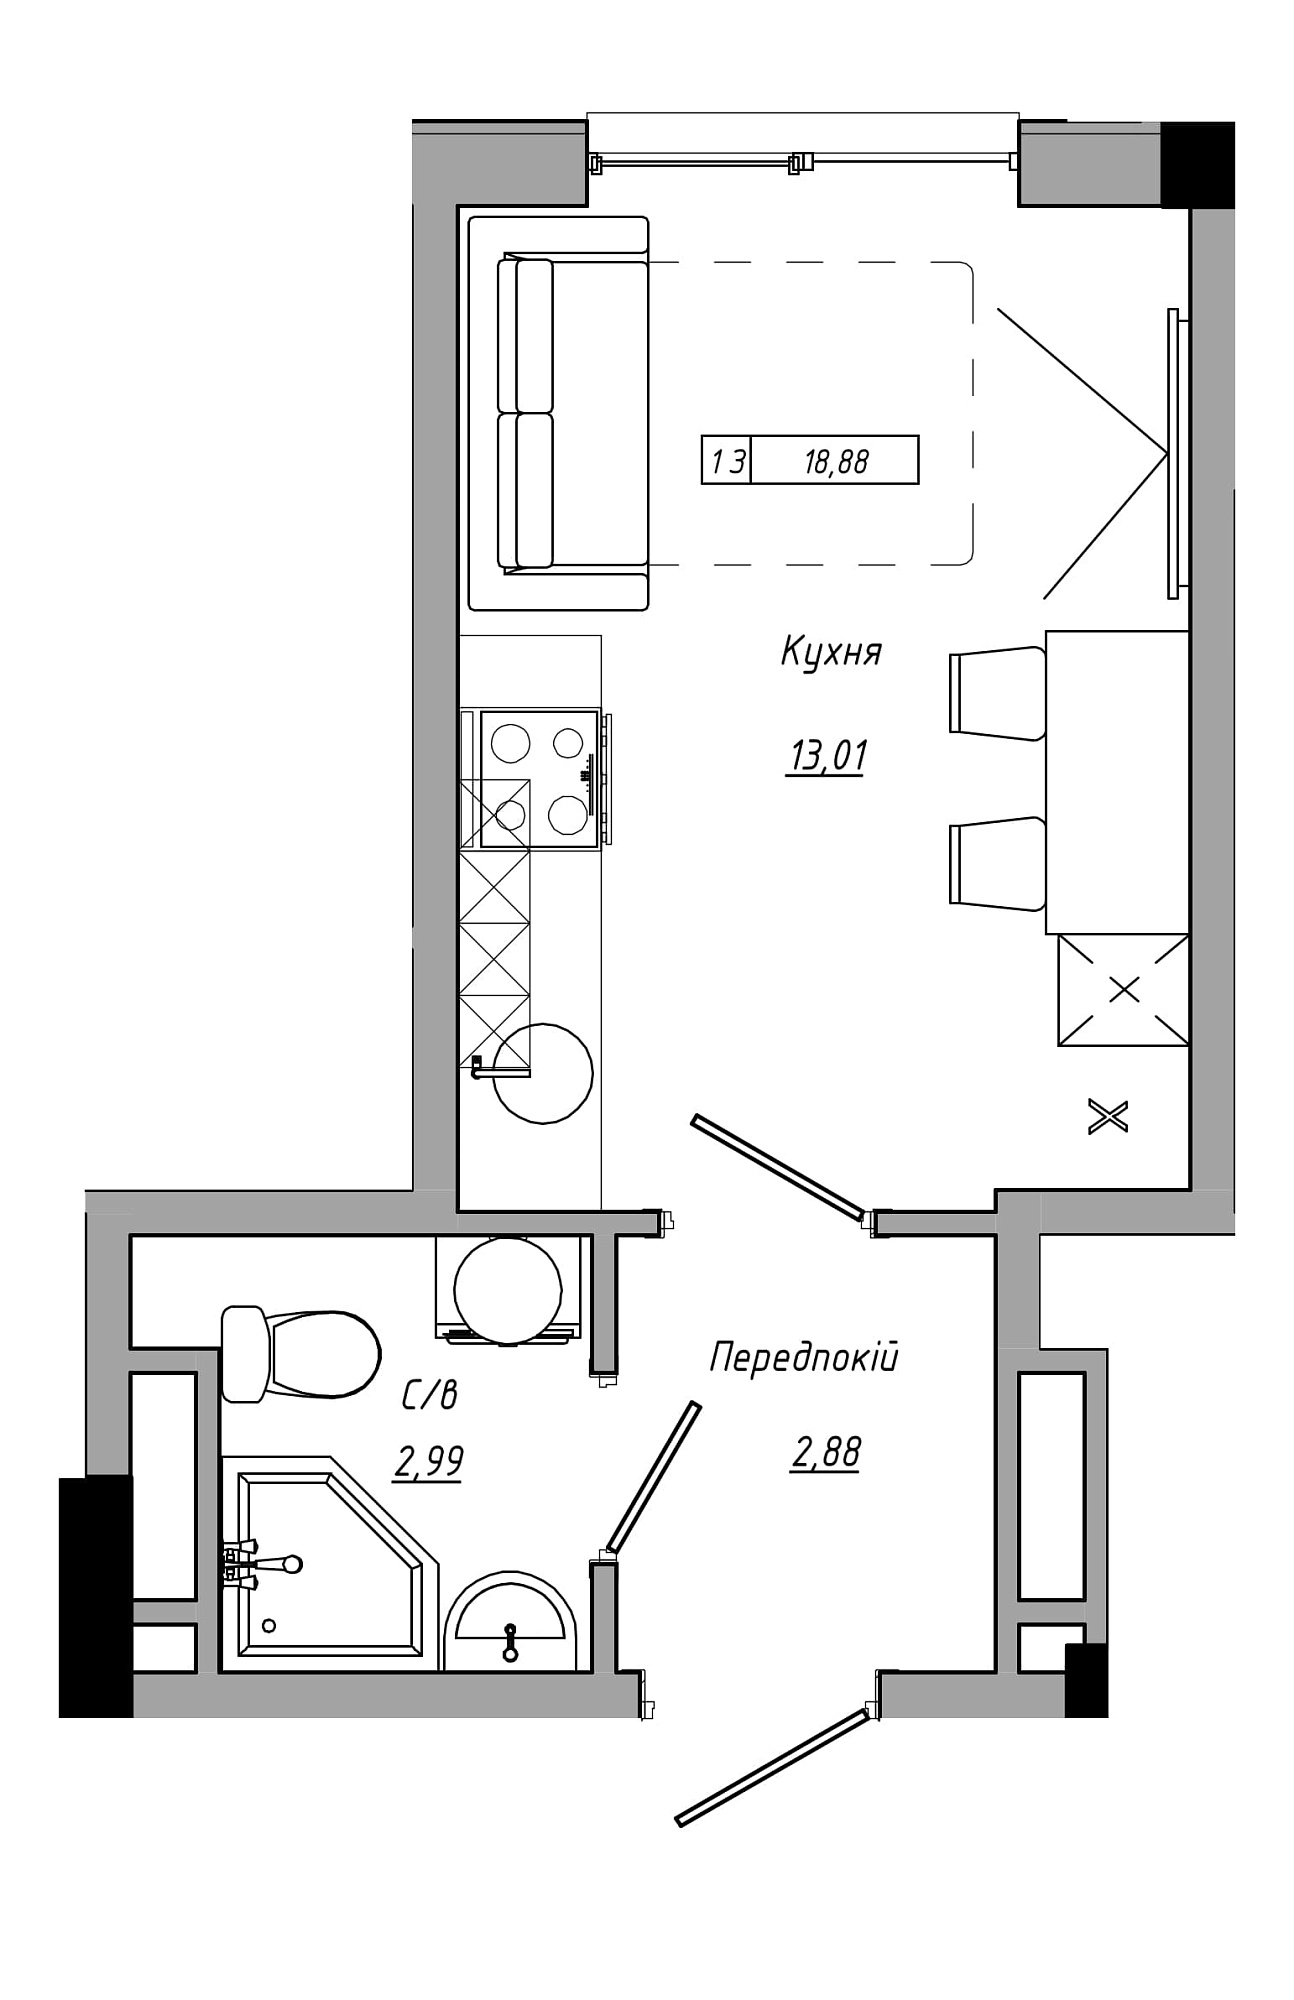 Planning Smart flats area 18.88m2, AB-21-07/00011.